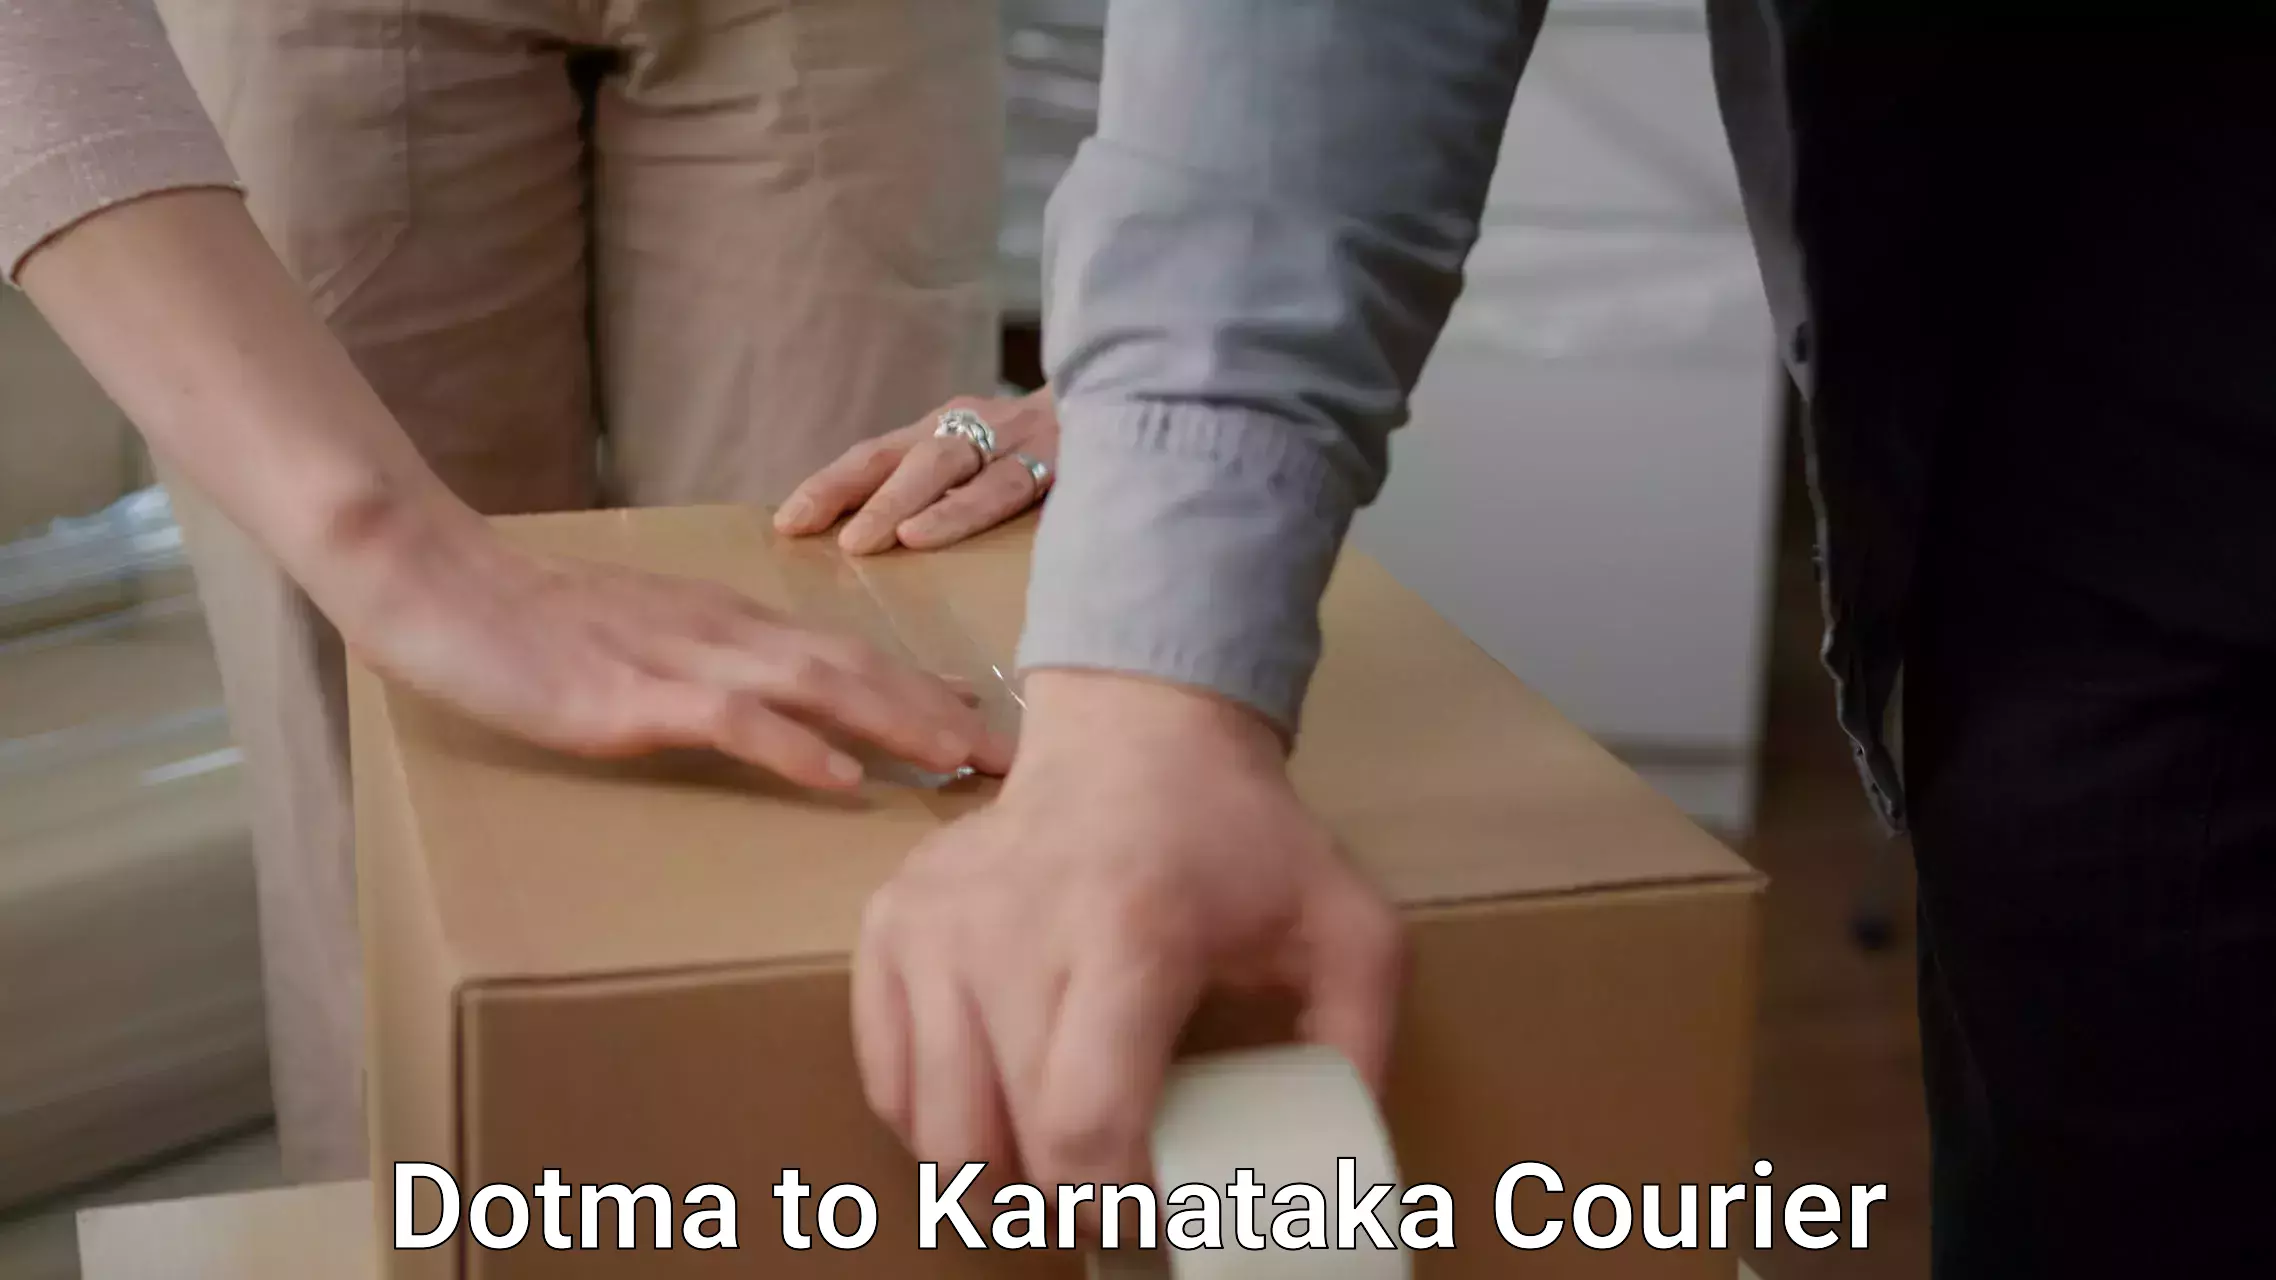 Efficient moving and packing Dotma to Karnataka